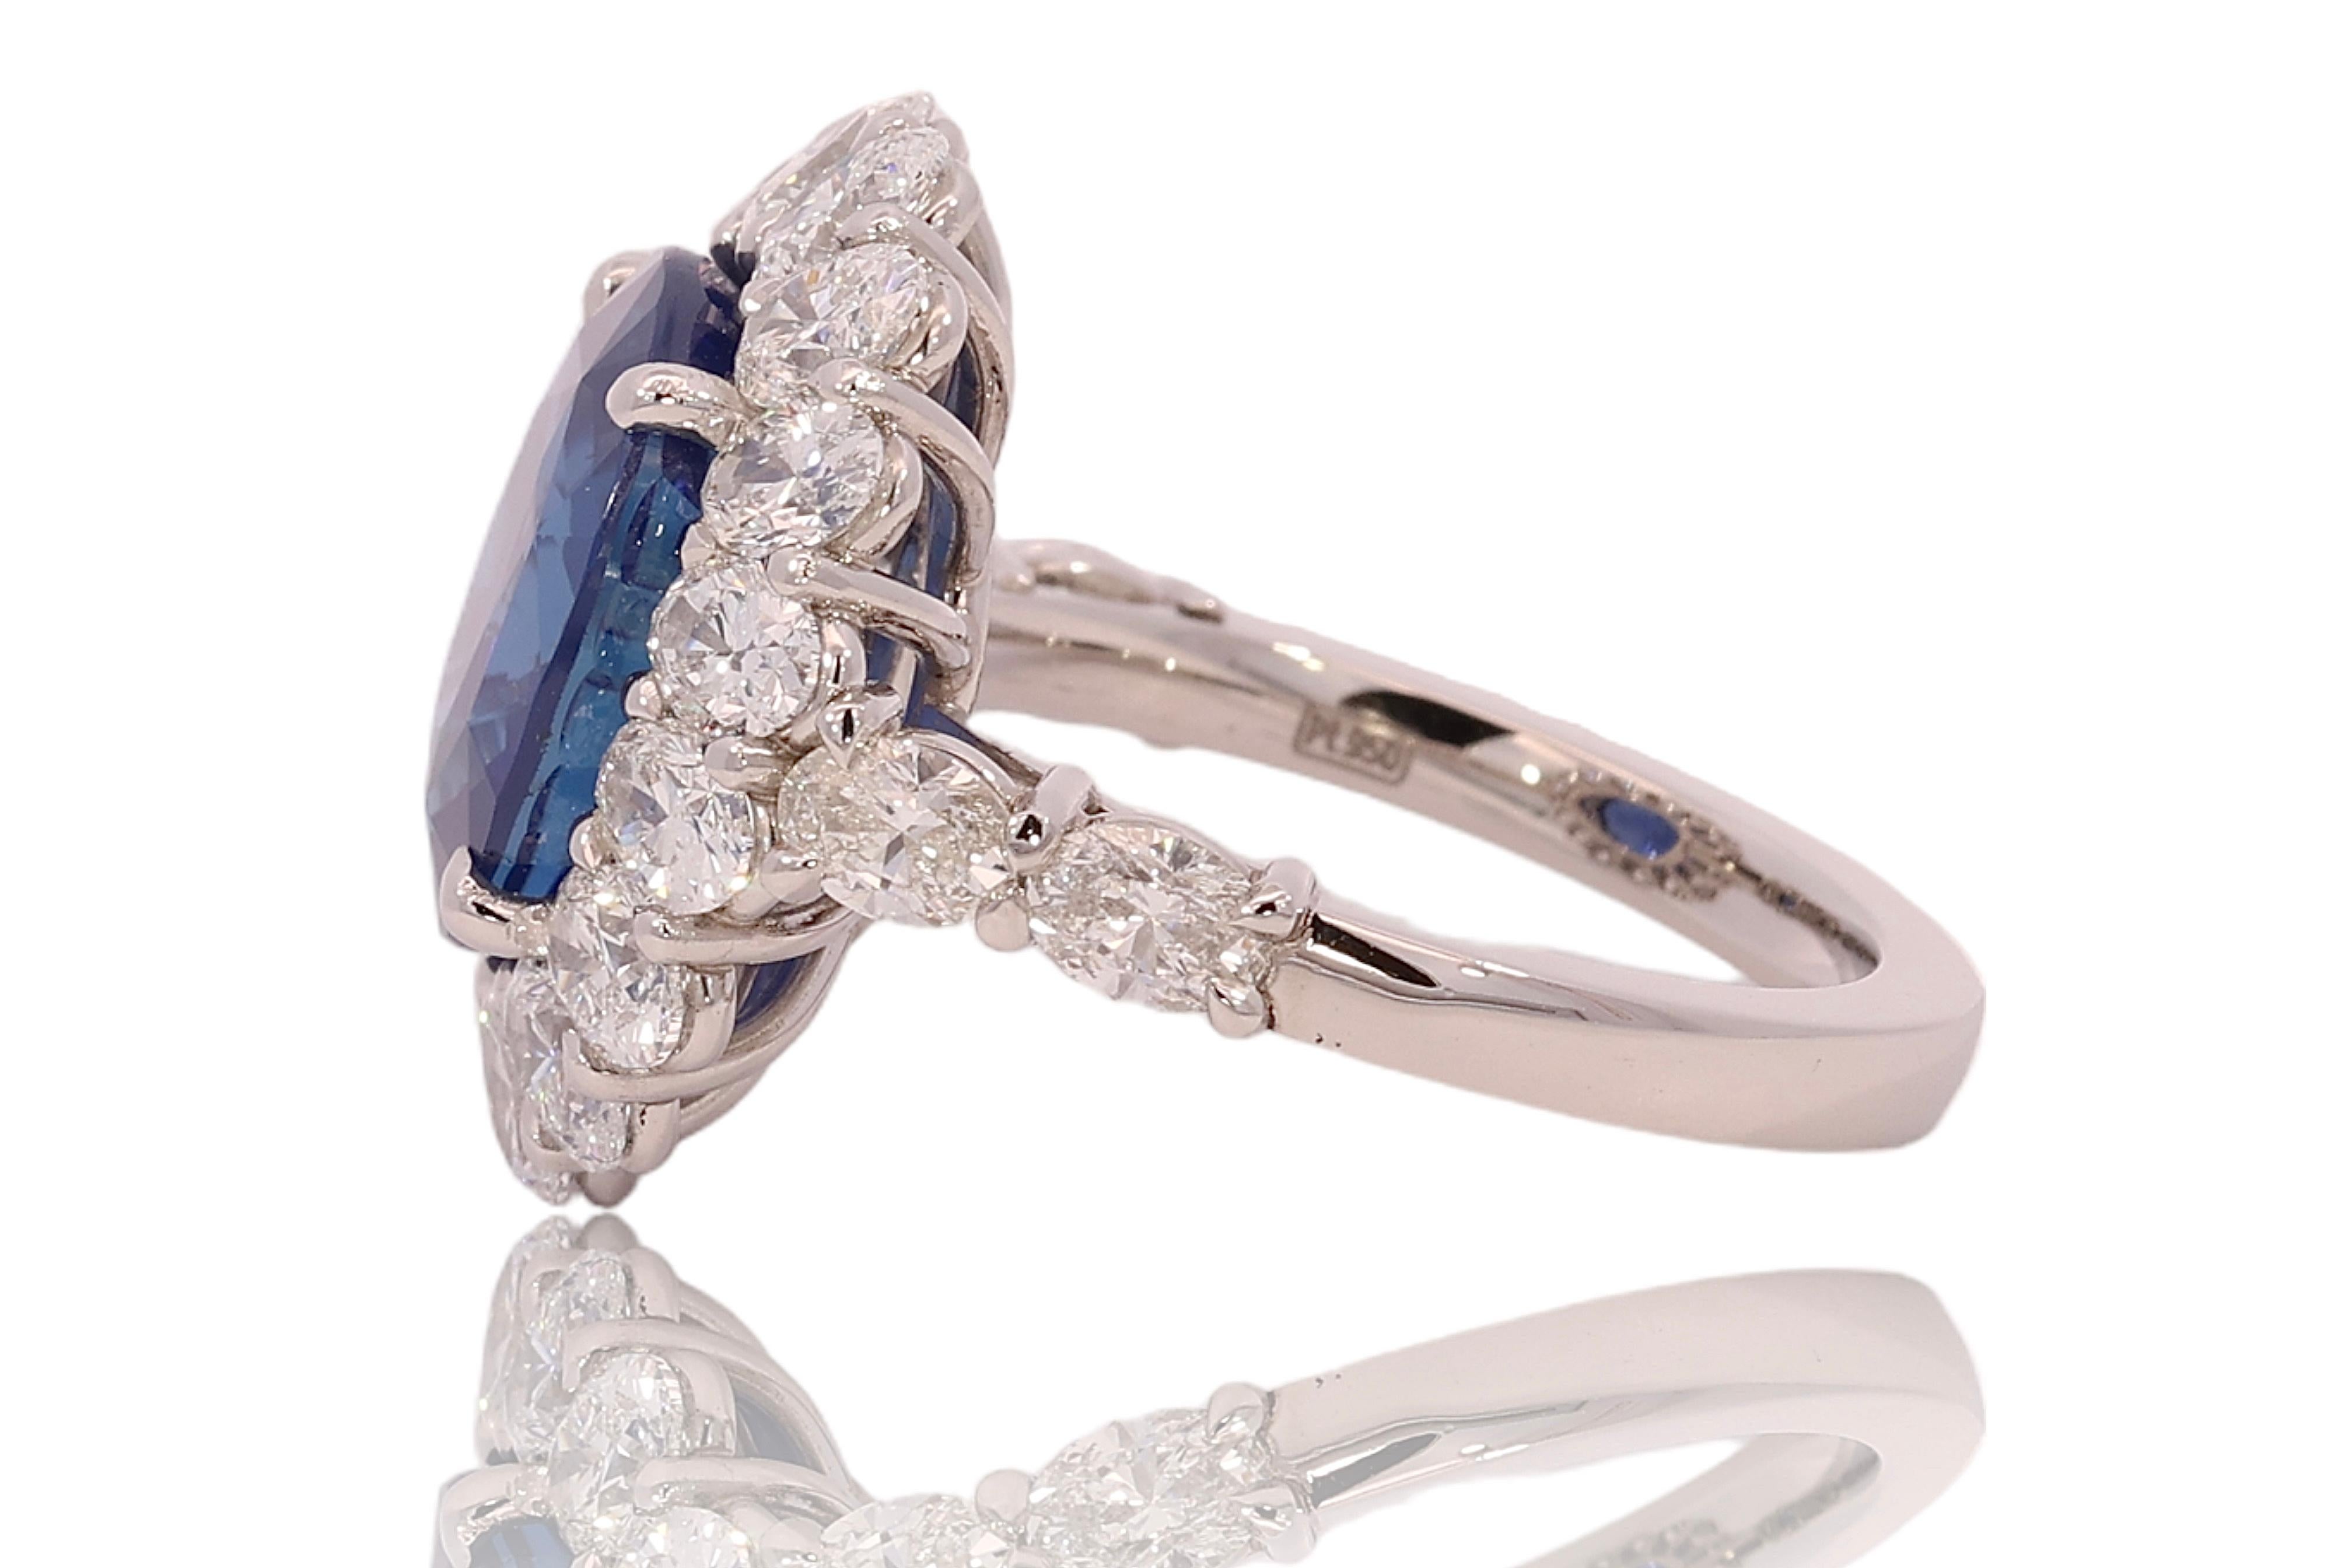 Oval Cut Platinum Ring 8.02 Carat Kashmir Sapphire, 3.75ct Oval Diamonds, IGI Certified For Sale